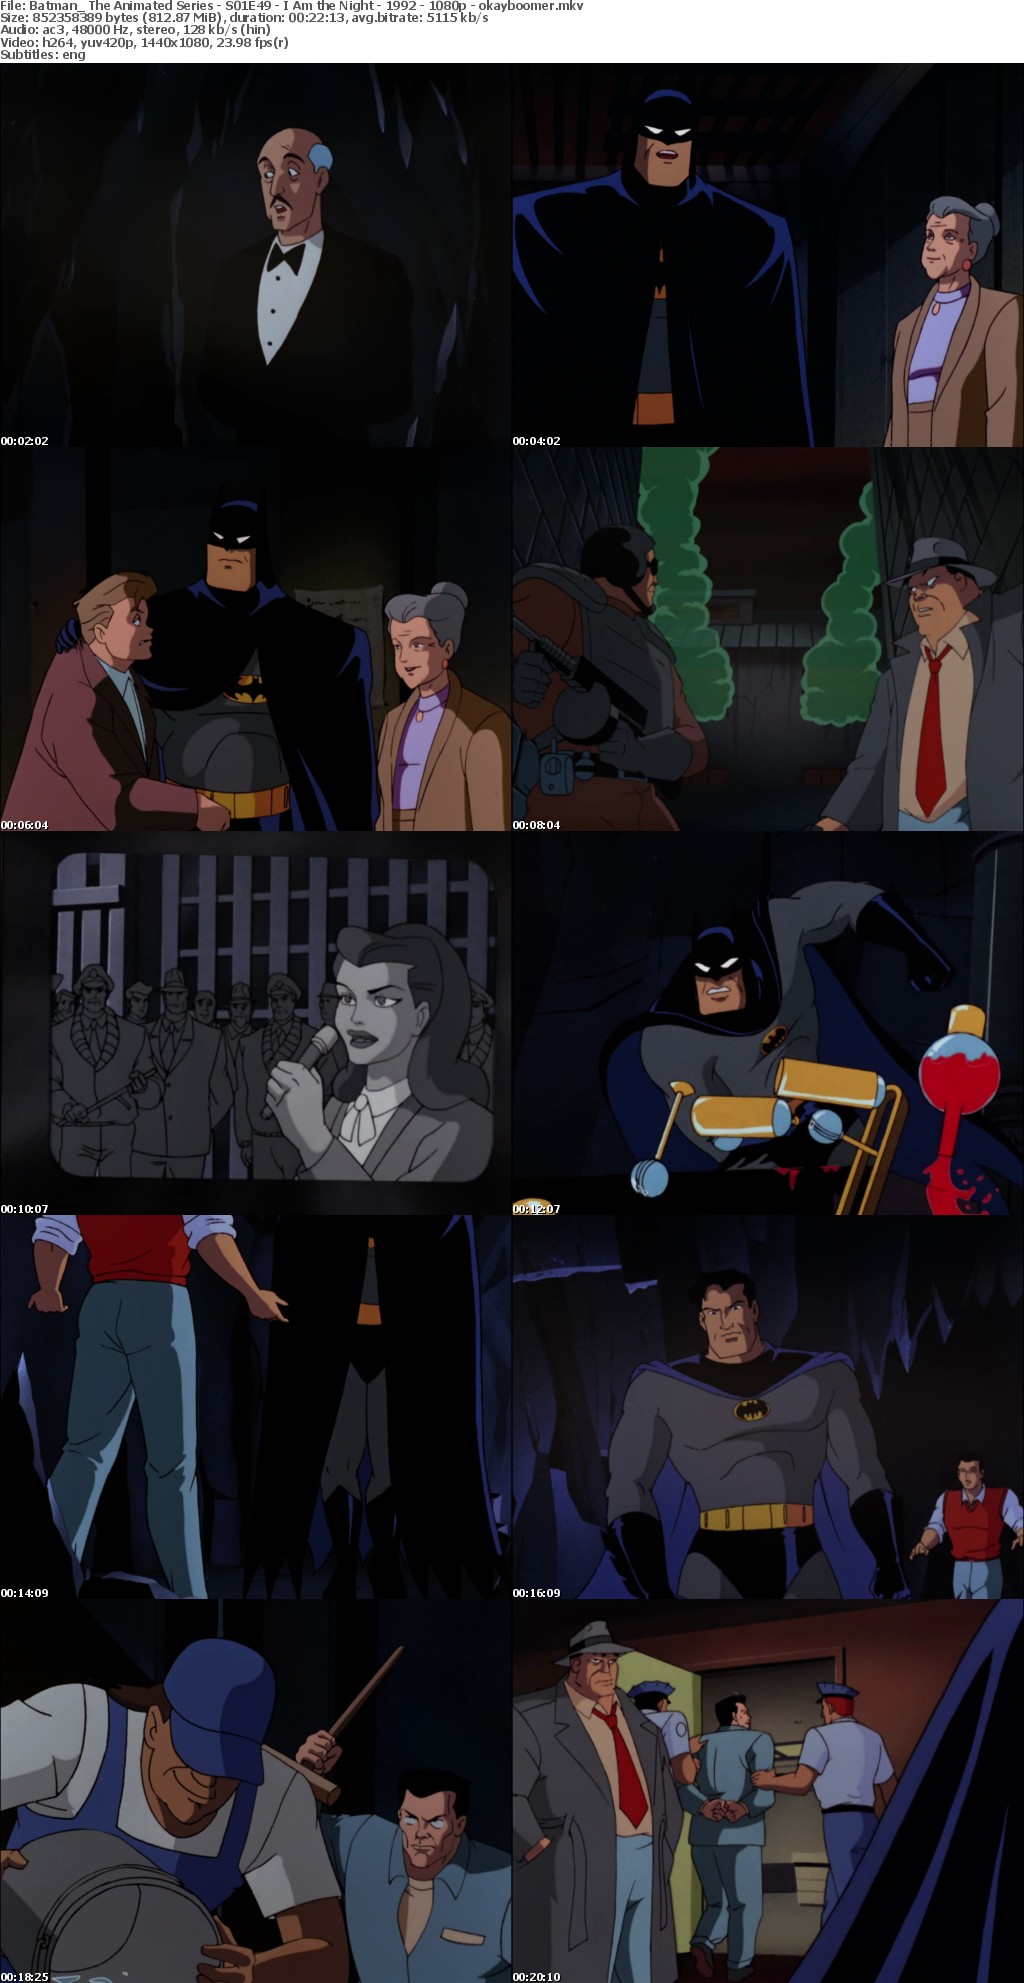 Batman The Animated Series - S01E49 - I Am the Night - 1992 - 1080p - okayboomer mkv